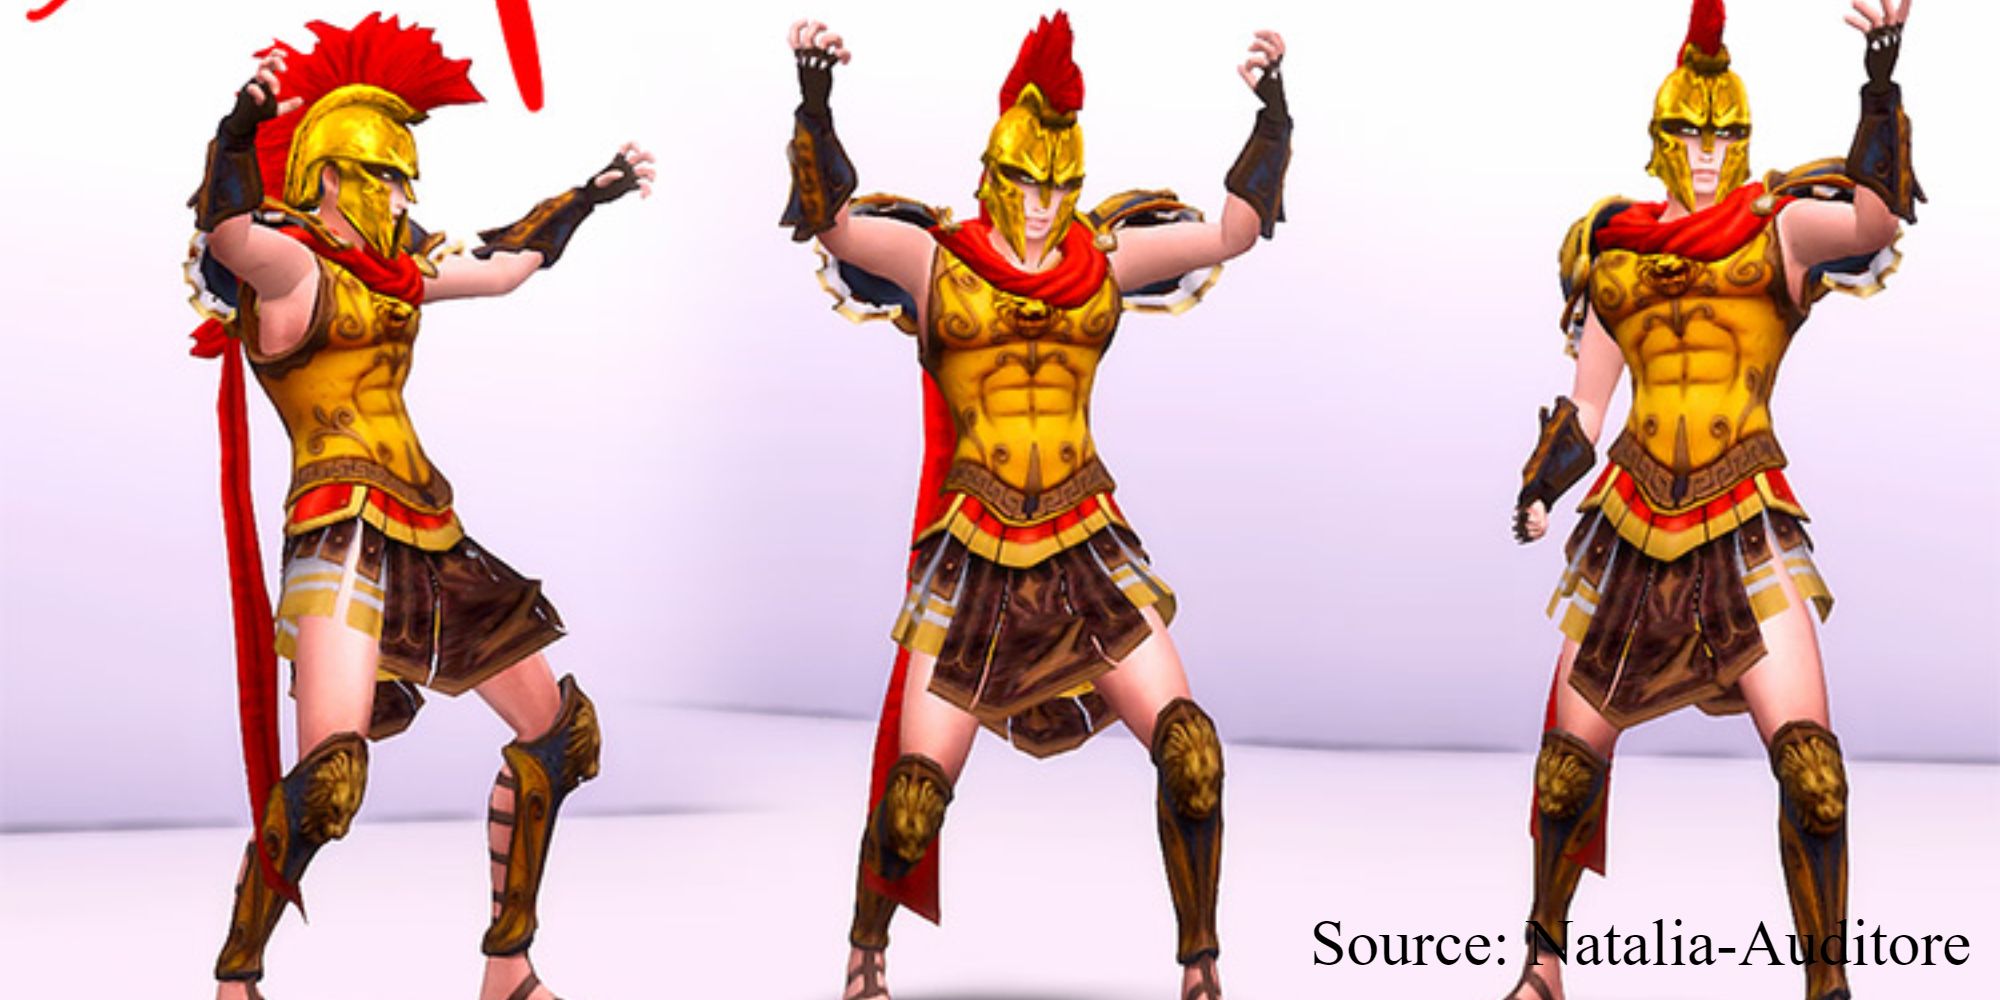 A Greek Sim dressed in Natalia-Auditore's warrior custom content poses